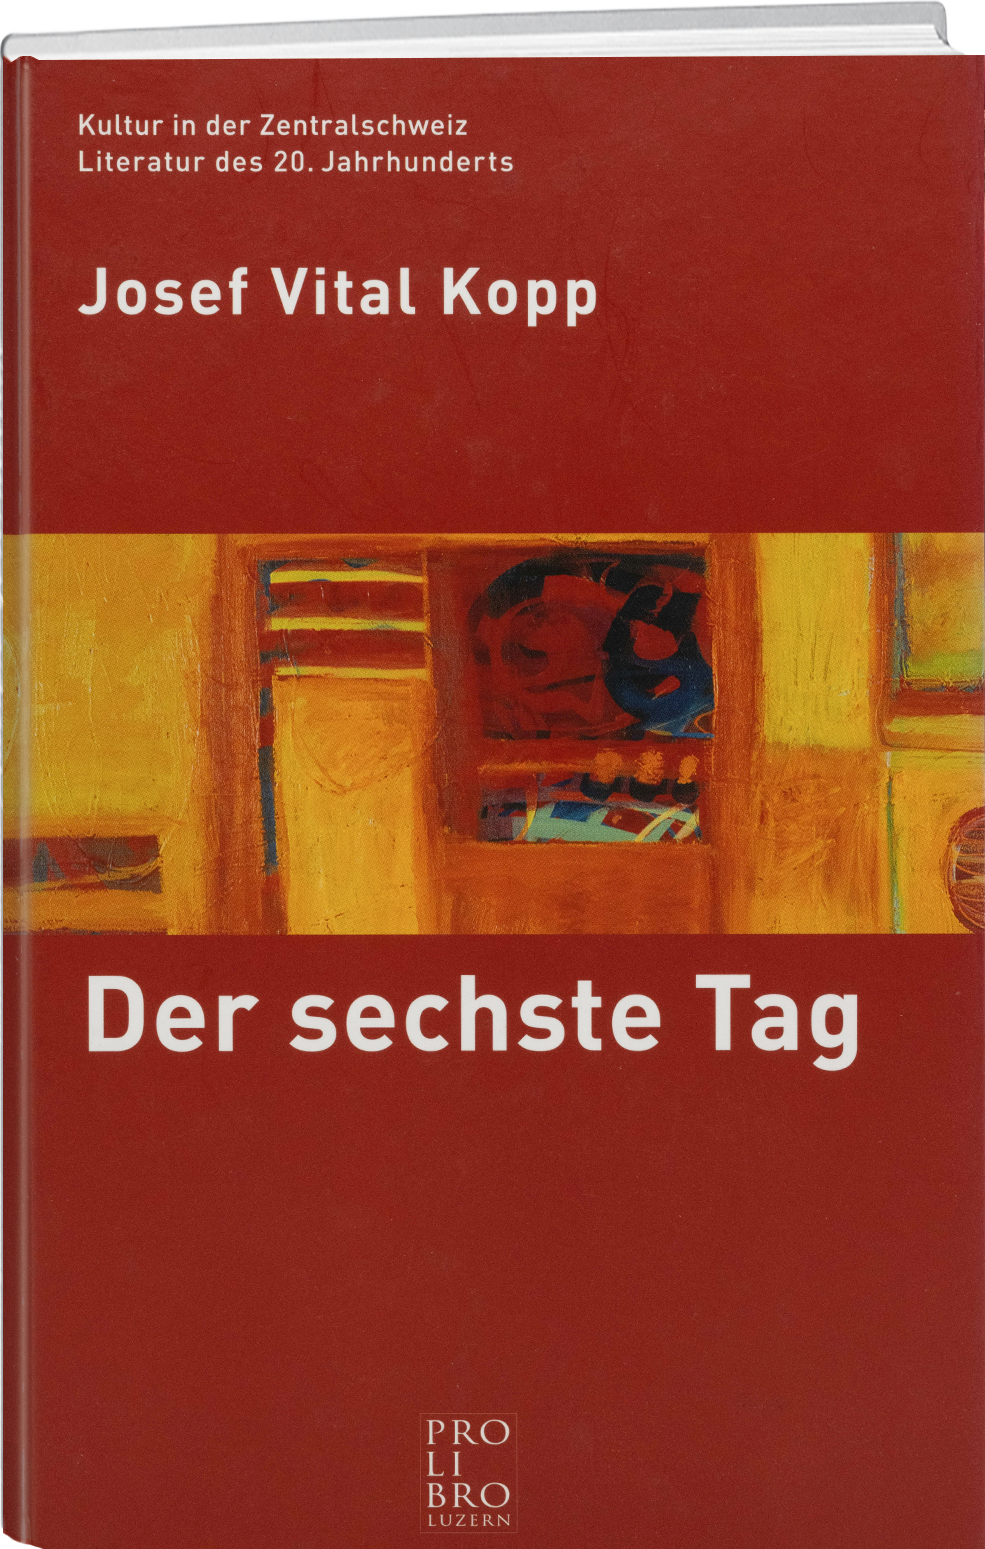 Josef Vital Kopp: Der sechste Tag - prolibro.ch